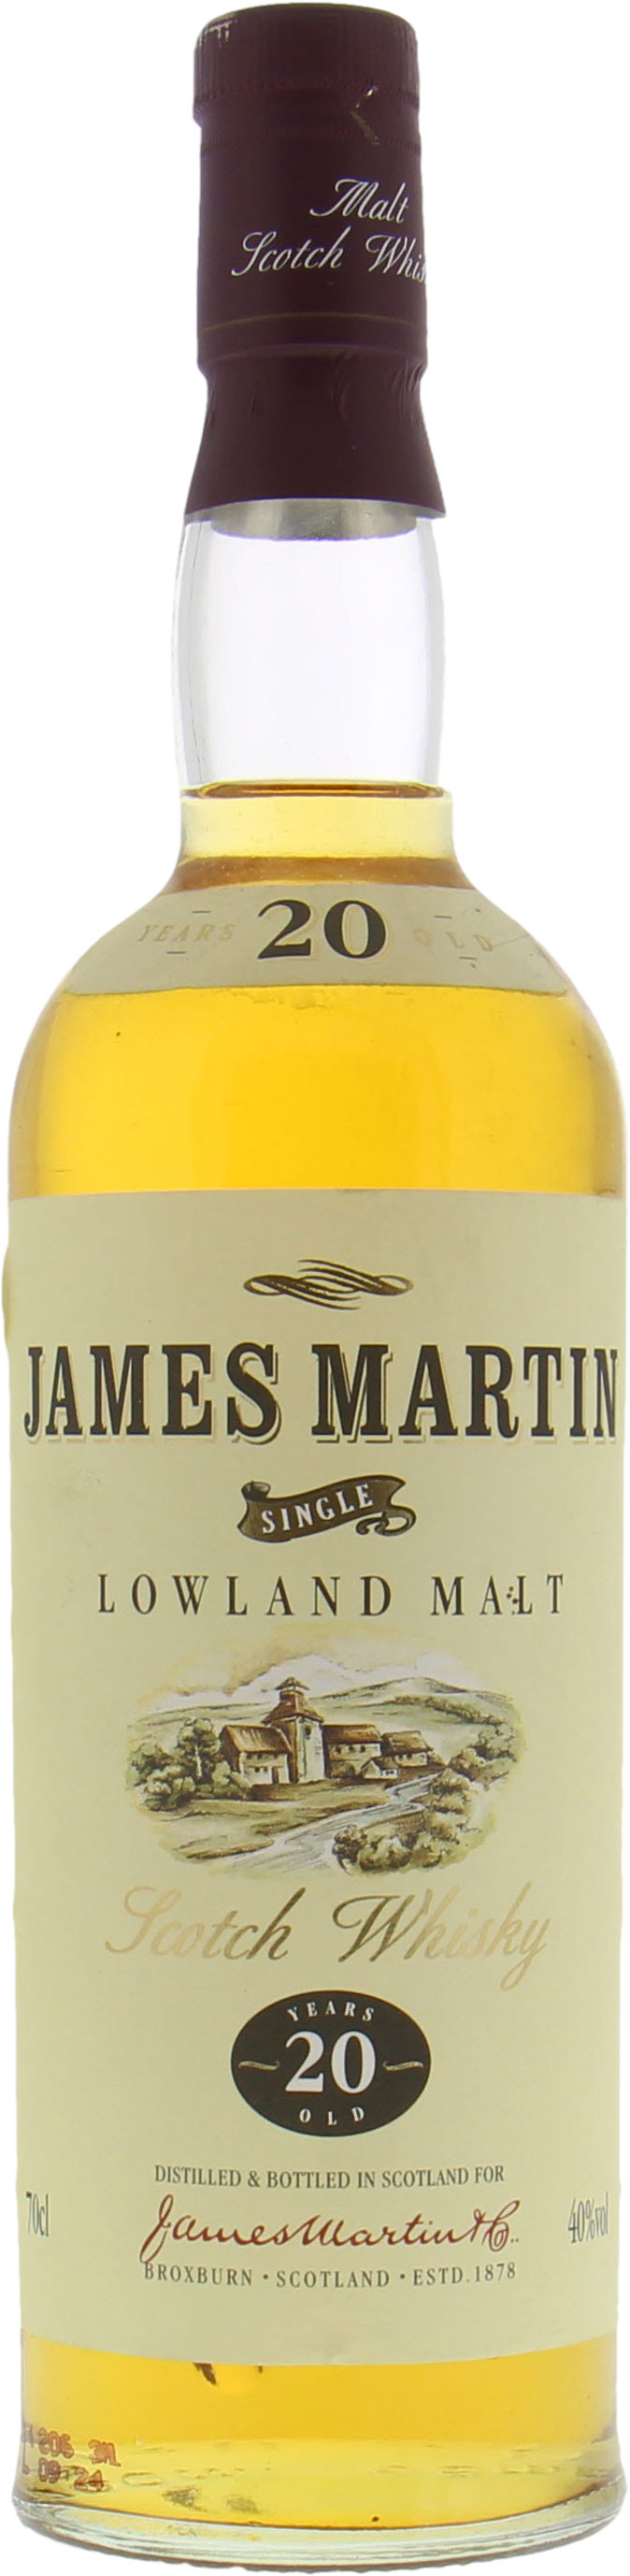 James Martin & Co. Ltd. (JM&C) - 20 Years Old Single Lowland Malt Scotch Whisky 40% NV No Original Box Included!